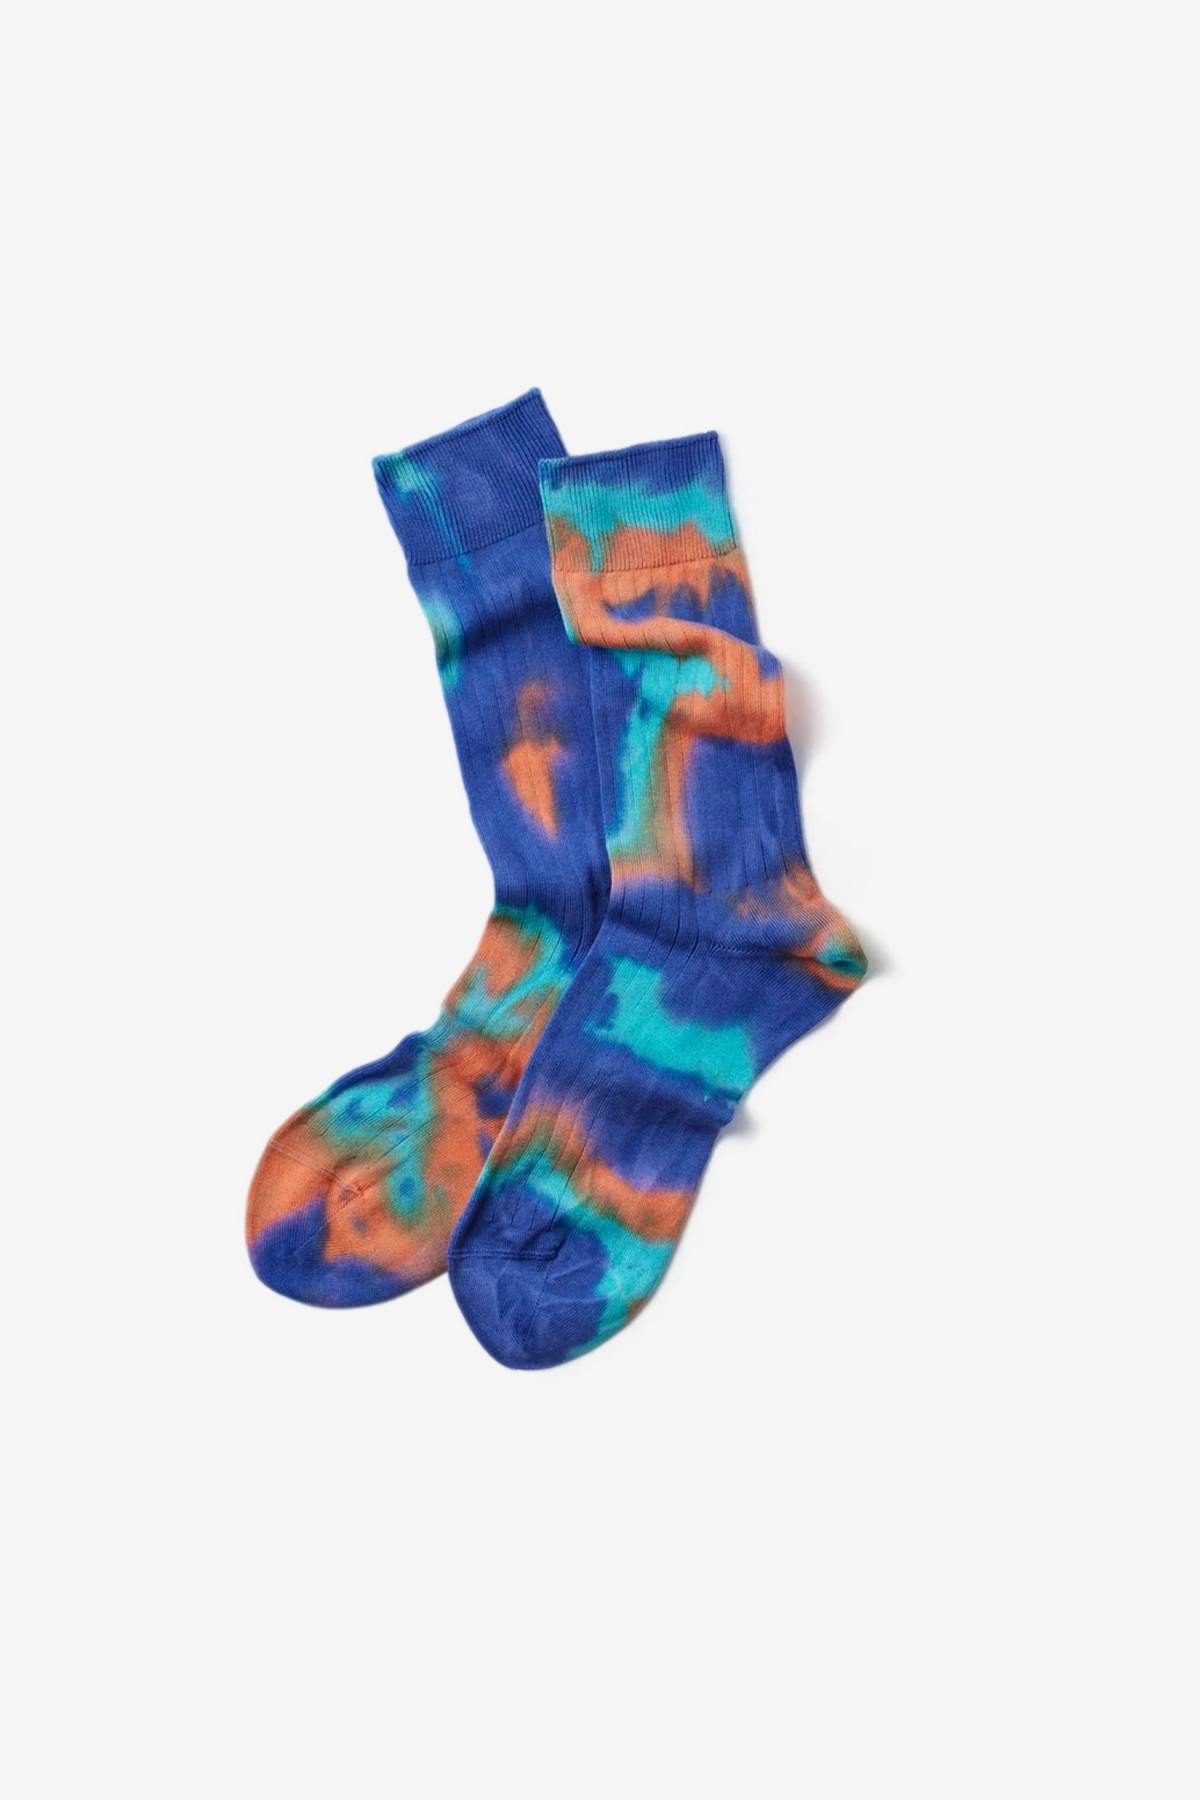 RoToTo Tie Dye Formal Crew Socks in Blue / Orange / Turbot